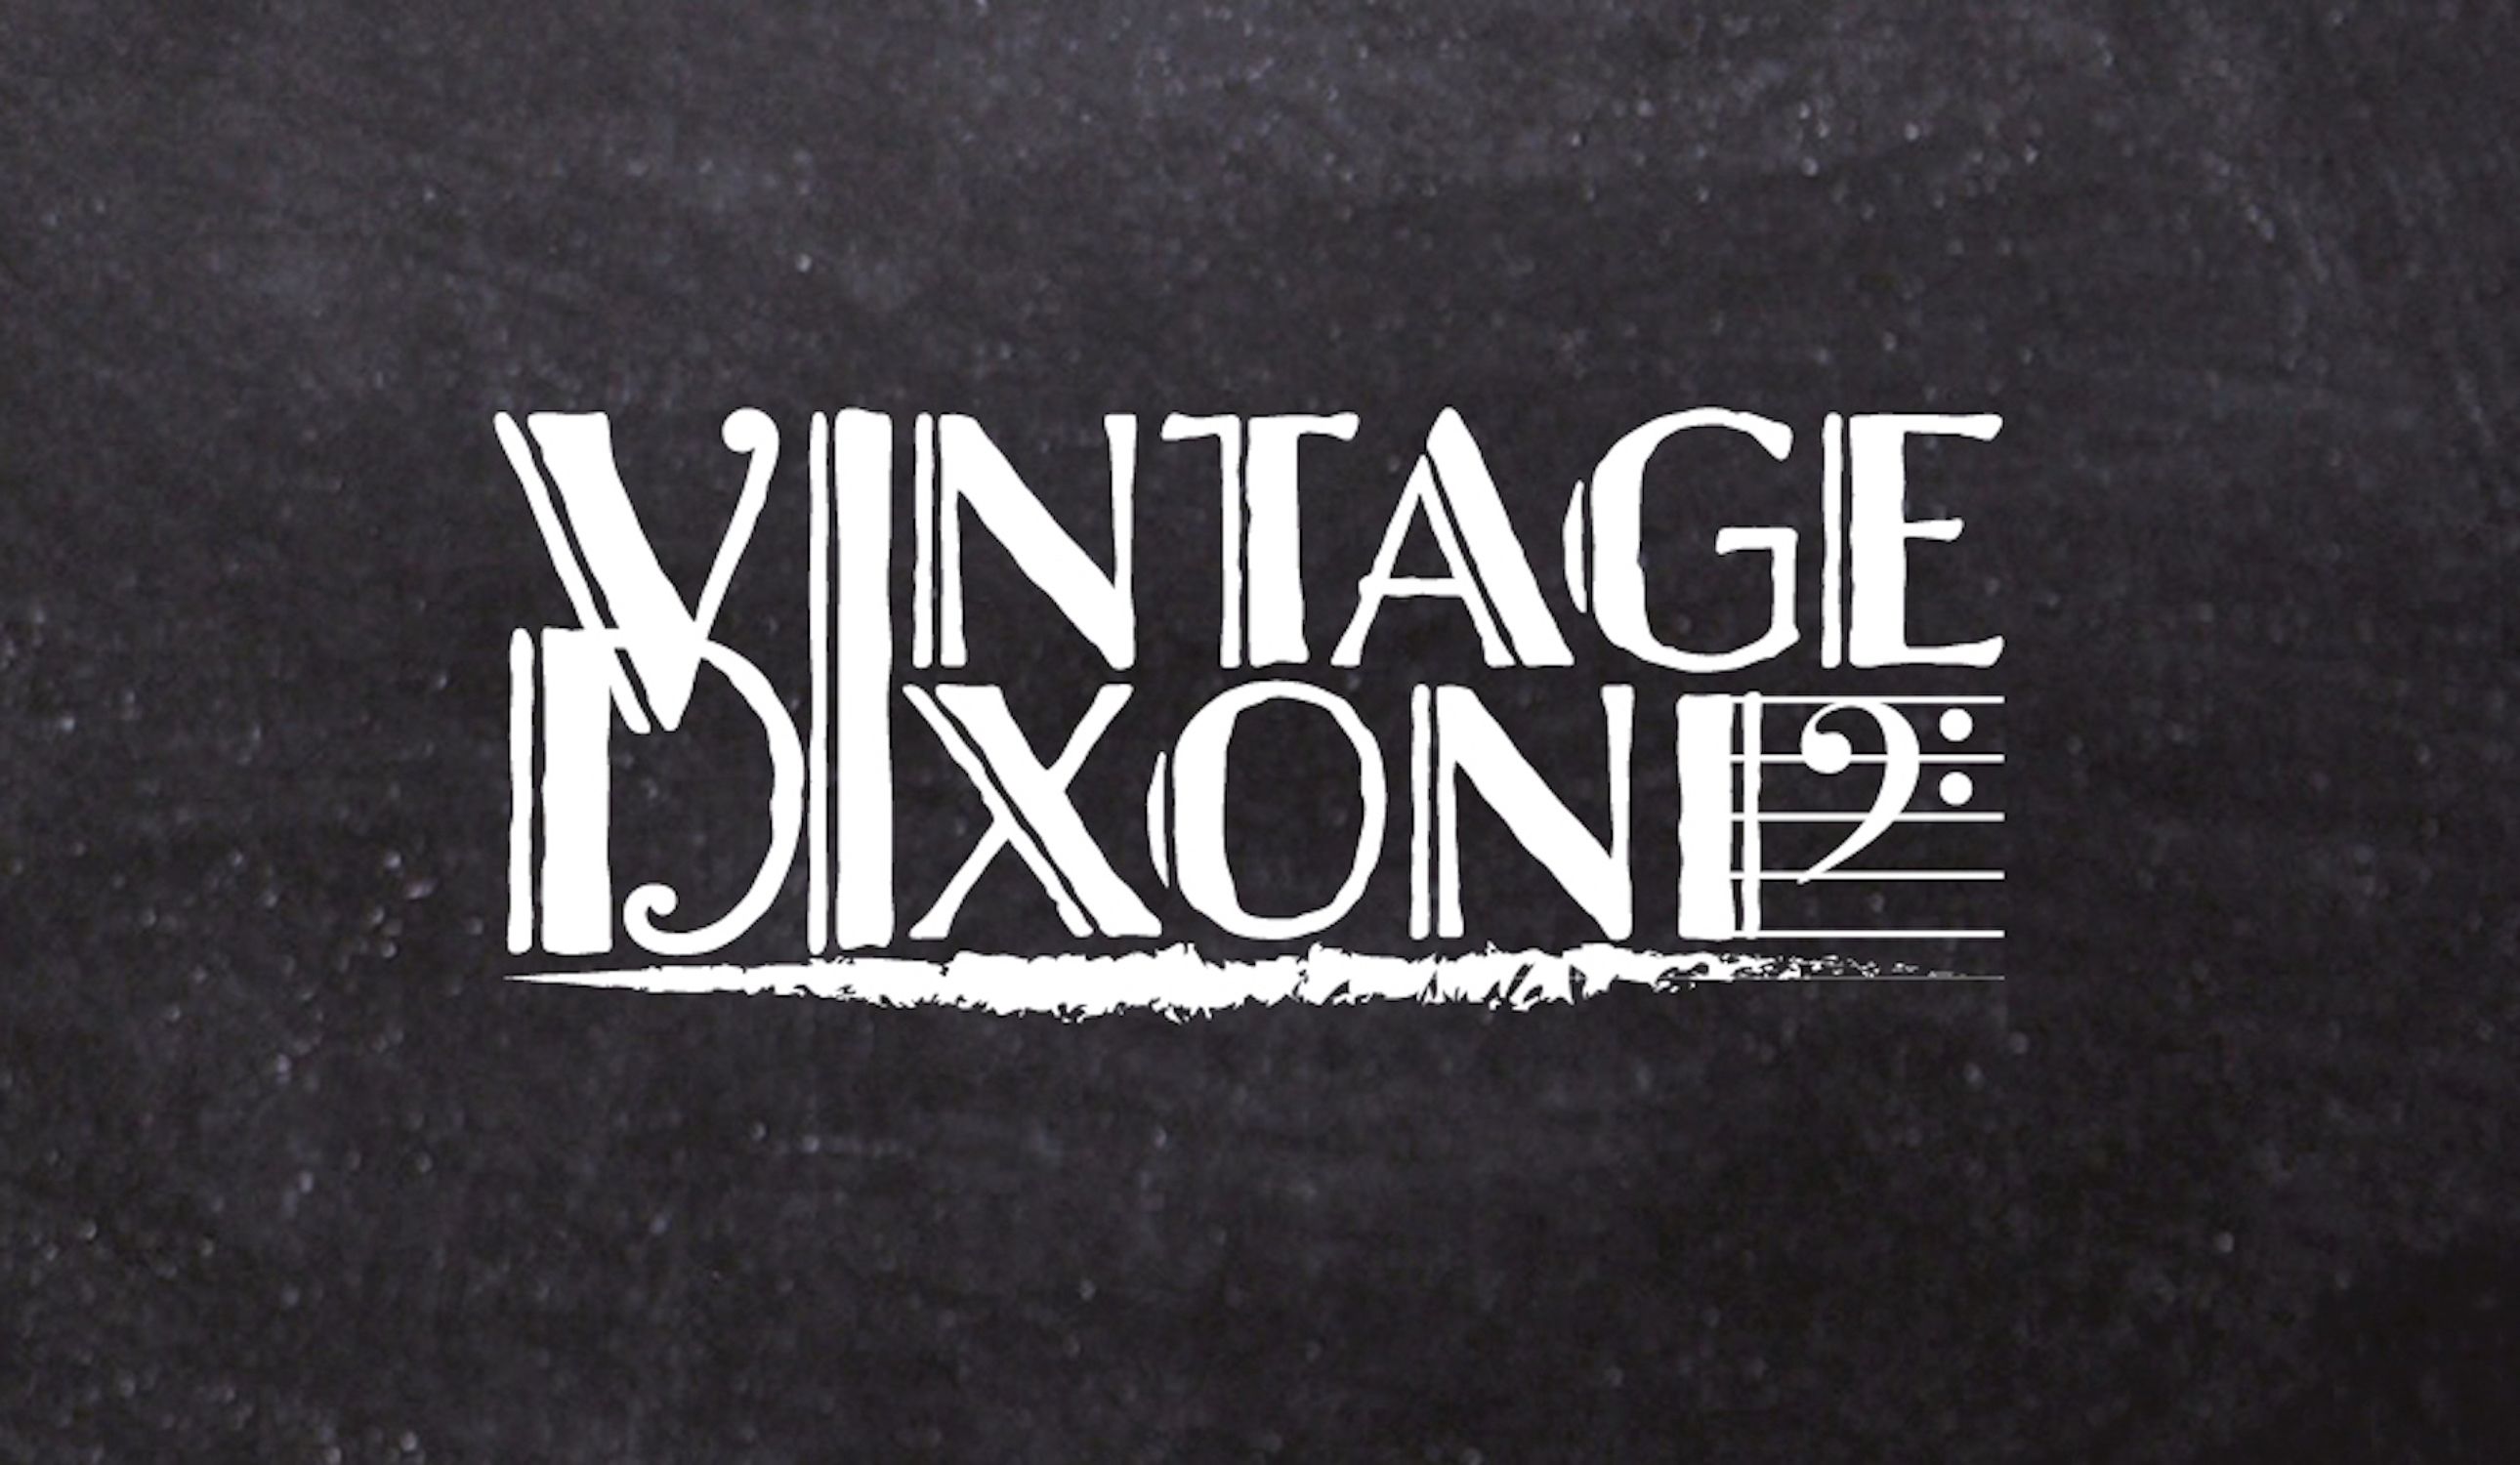 Alex Dixon's Vintage Dixon